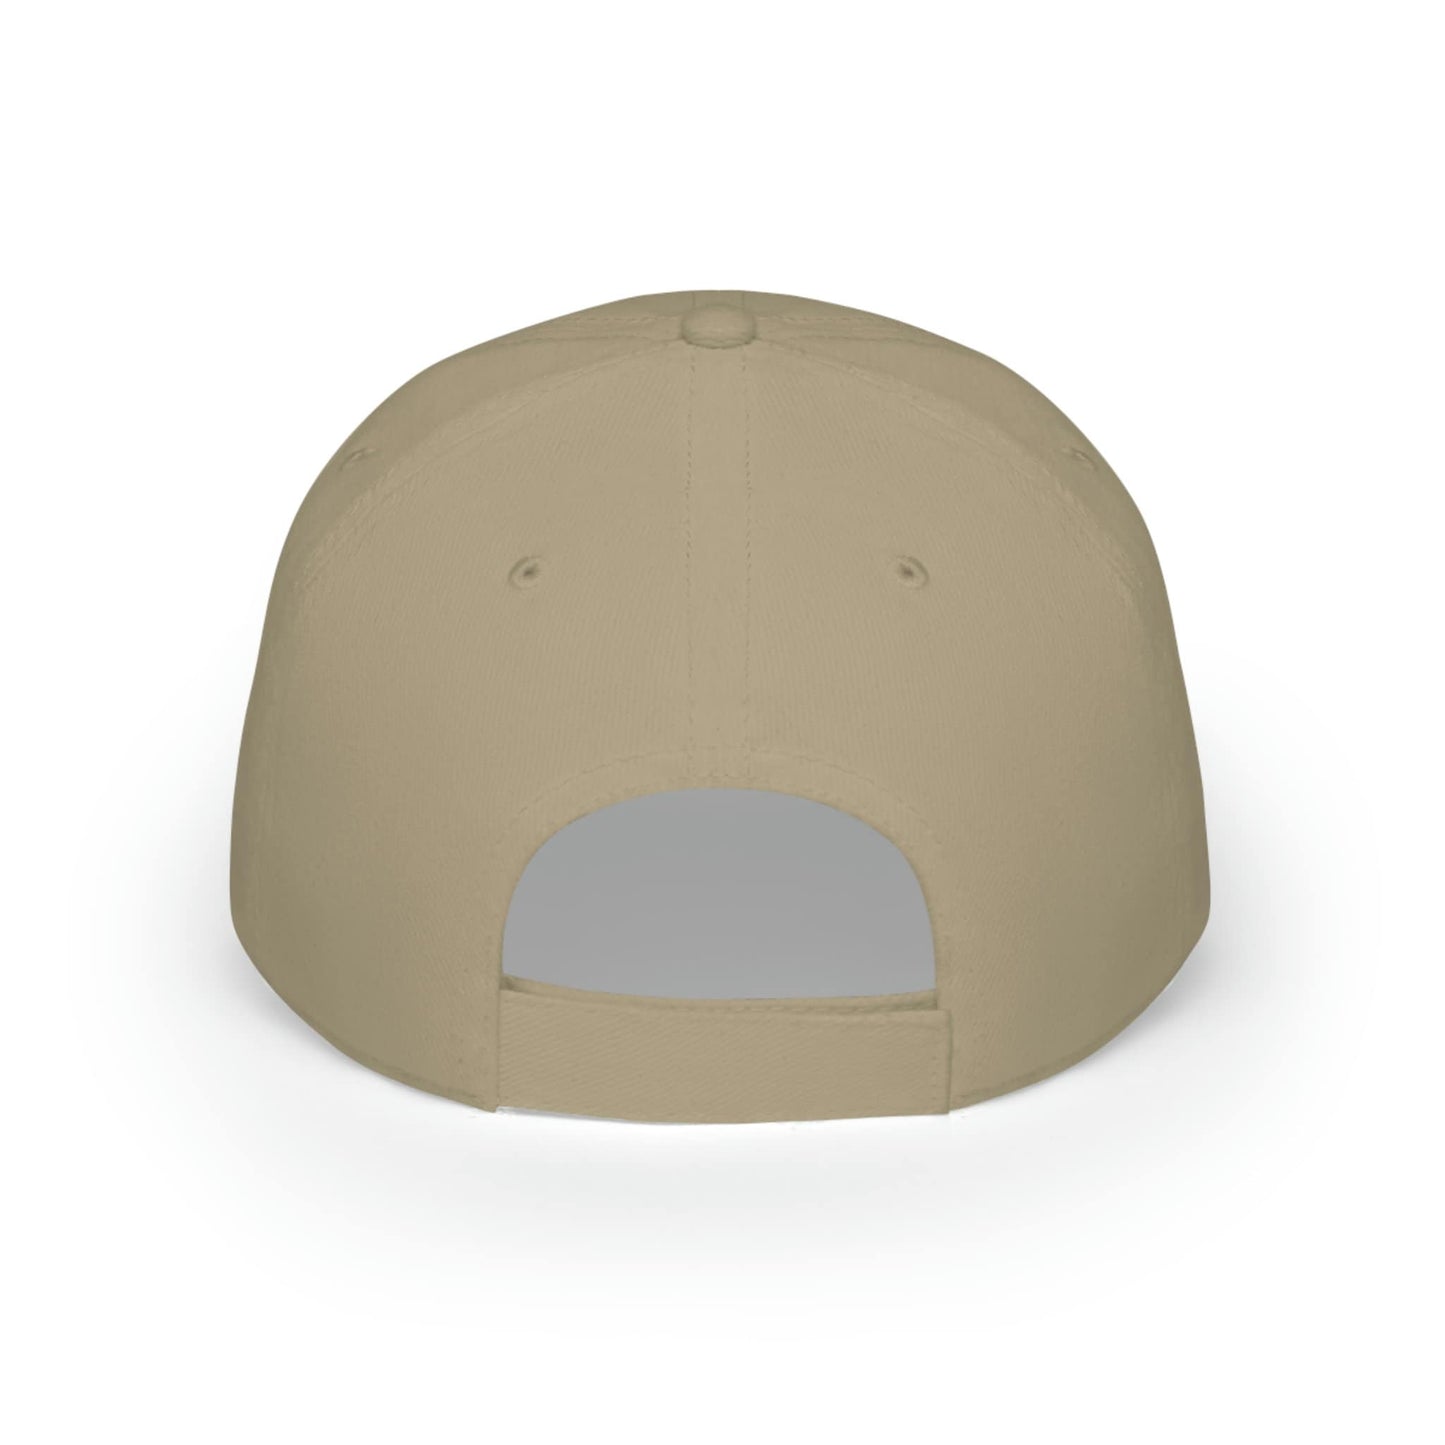 PRIDE Baseball Cap - Gay rainbow hat  - Equality - gay pride cap - gay baseball hat - hat - cap - pride hat - baseball cap - baseball hat